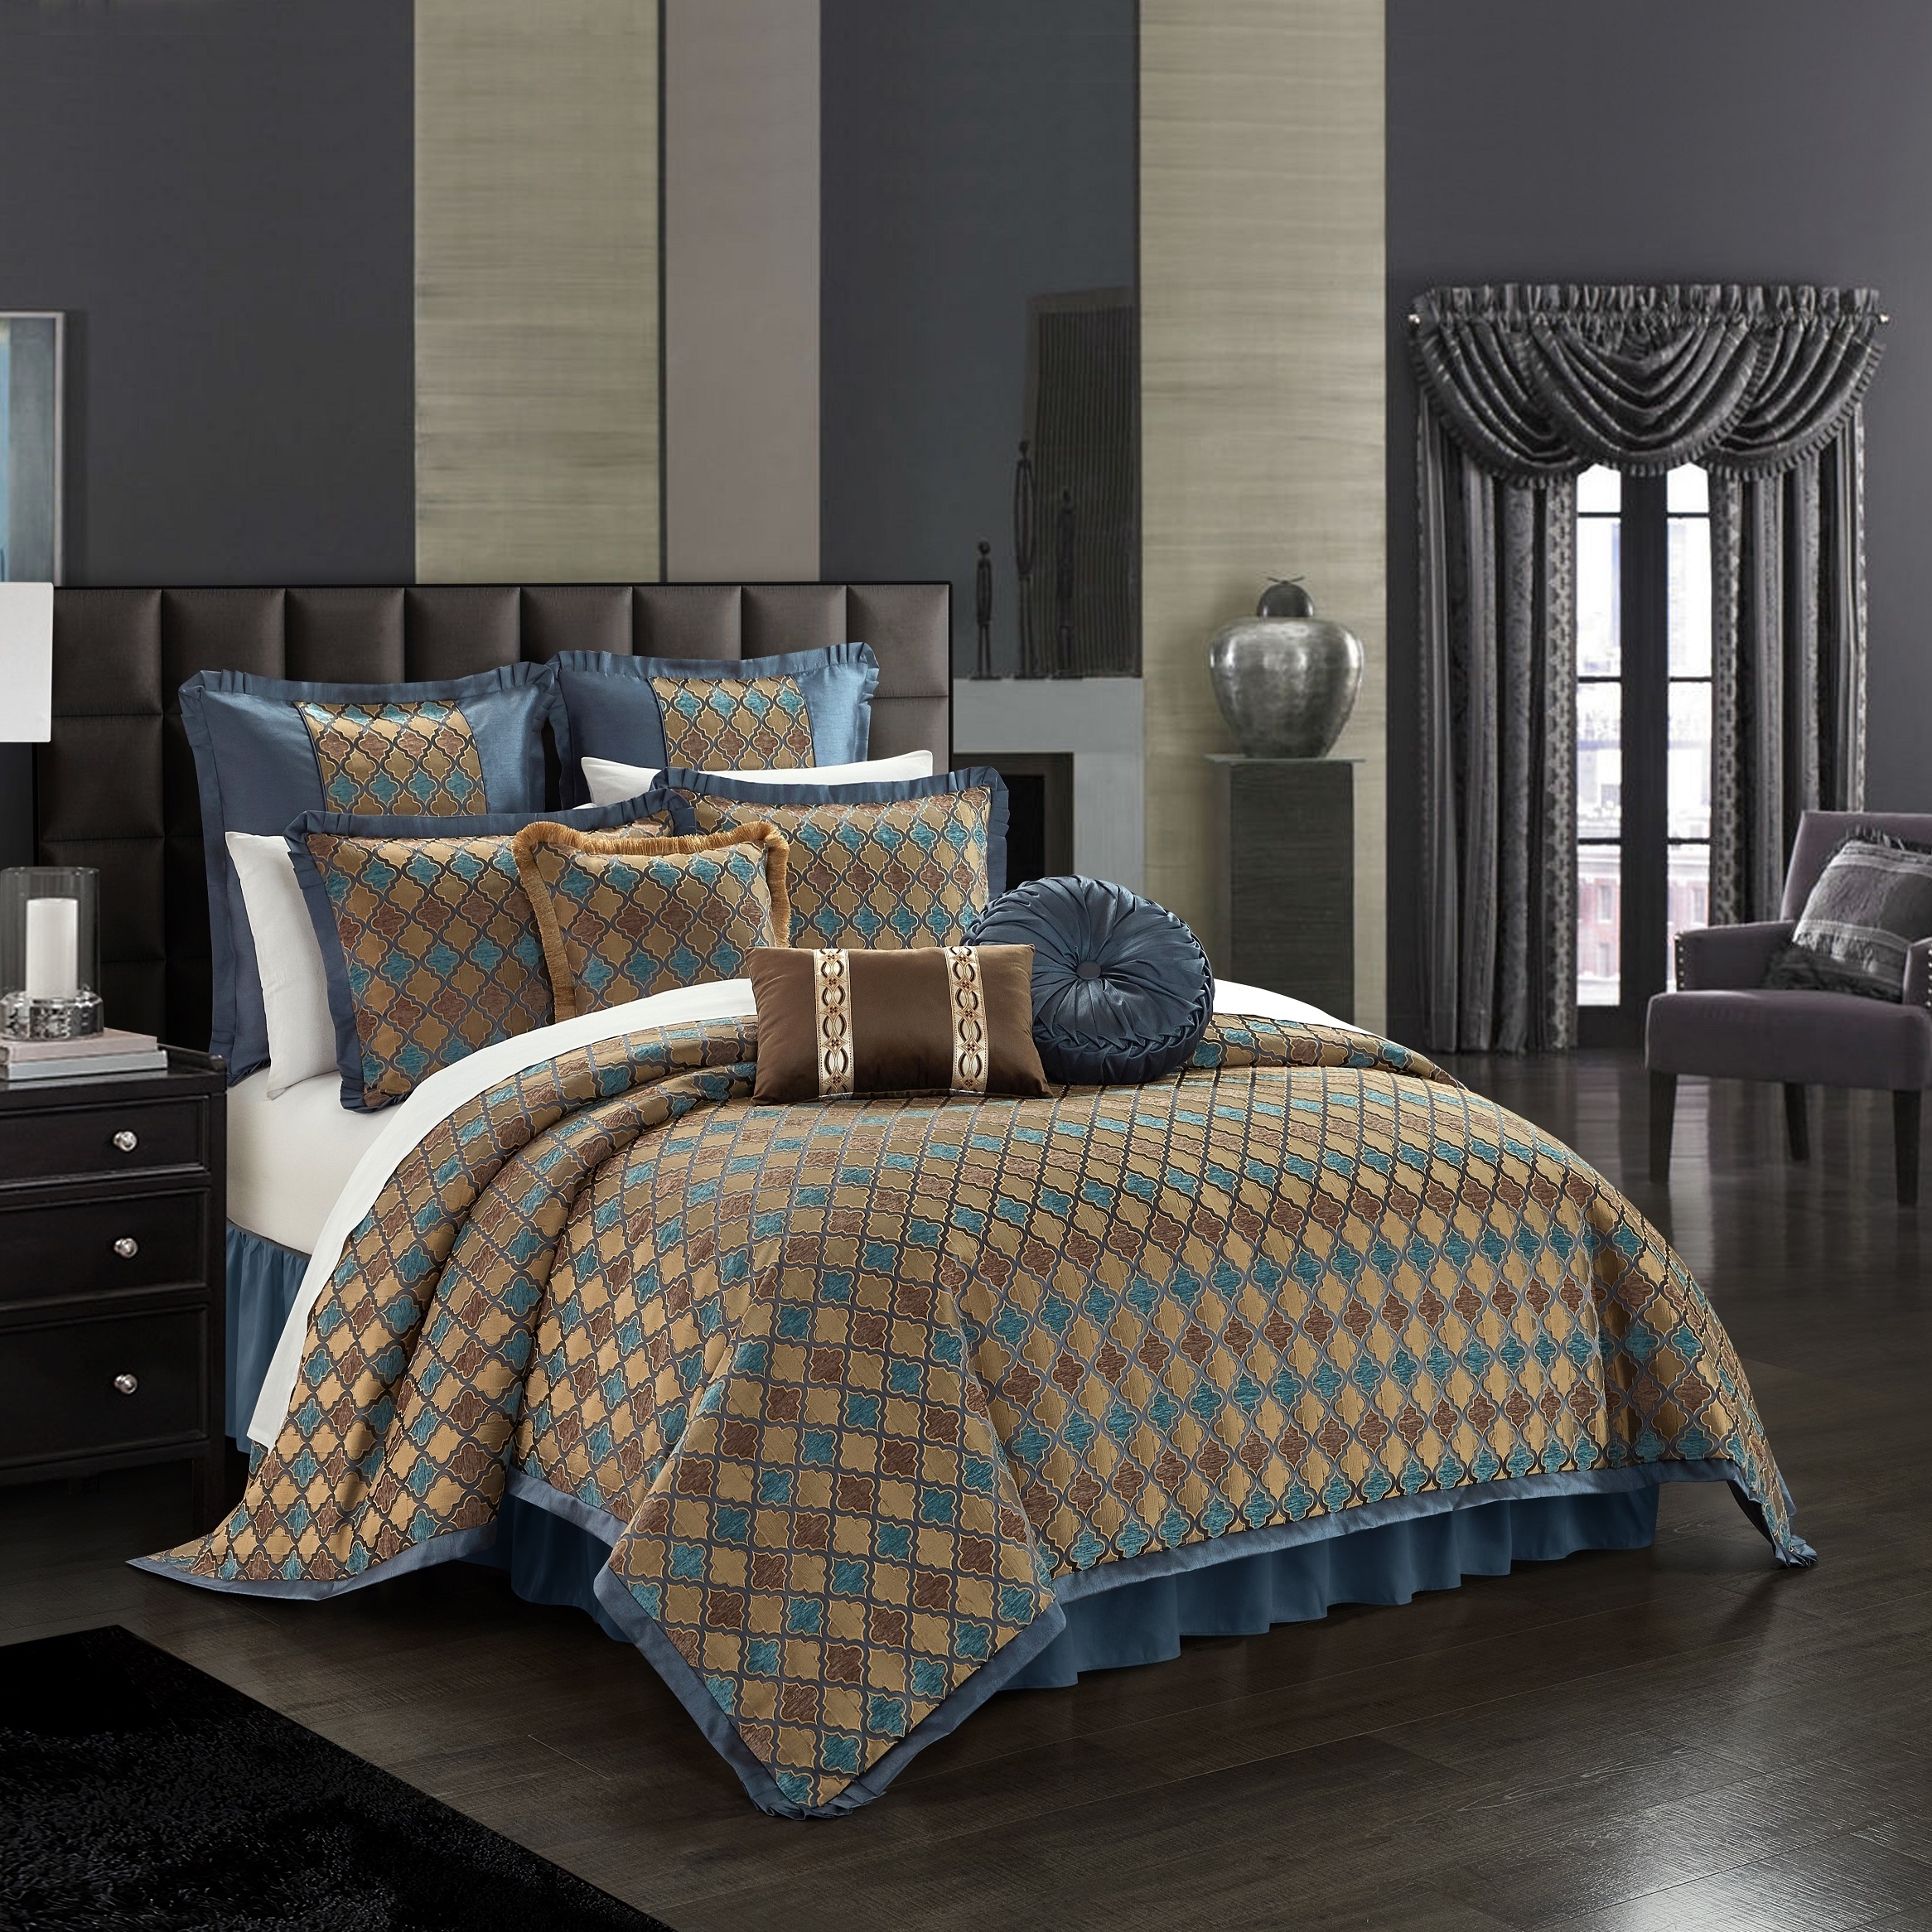 Sellen 9 Piece Comforter Set Chenille Geometric Scroll Pattern Flange Border Bedding - blue, king